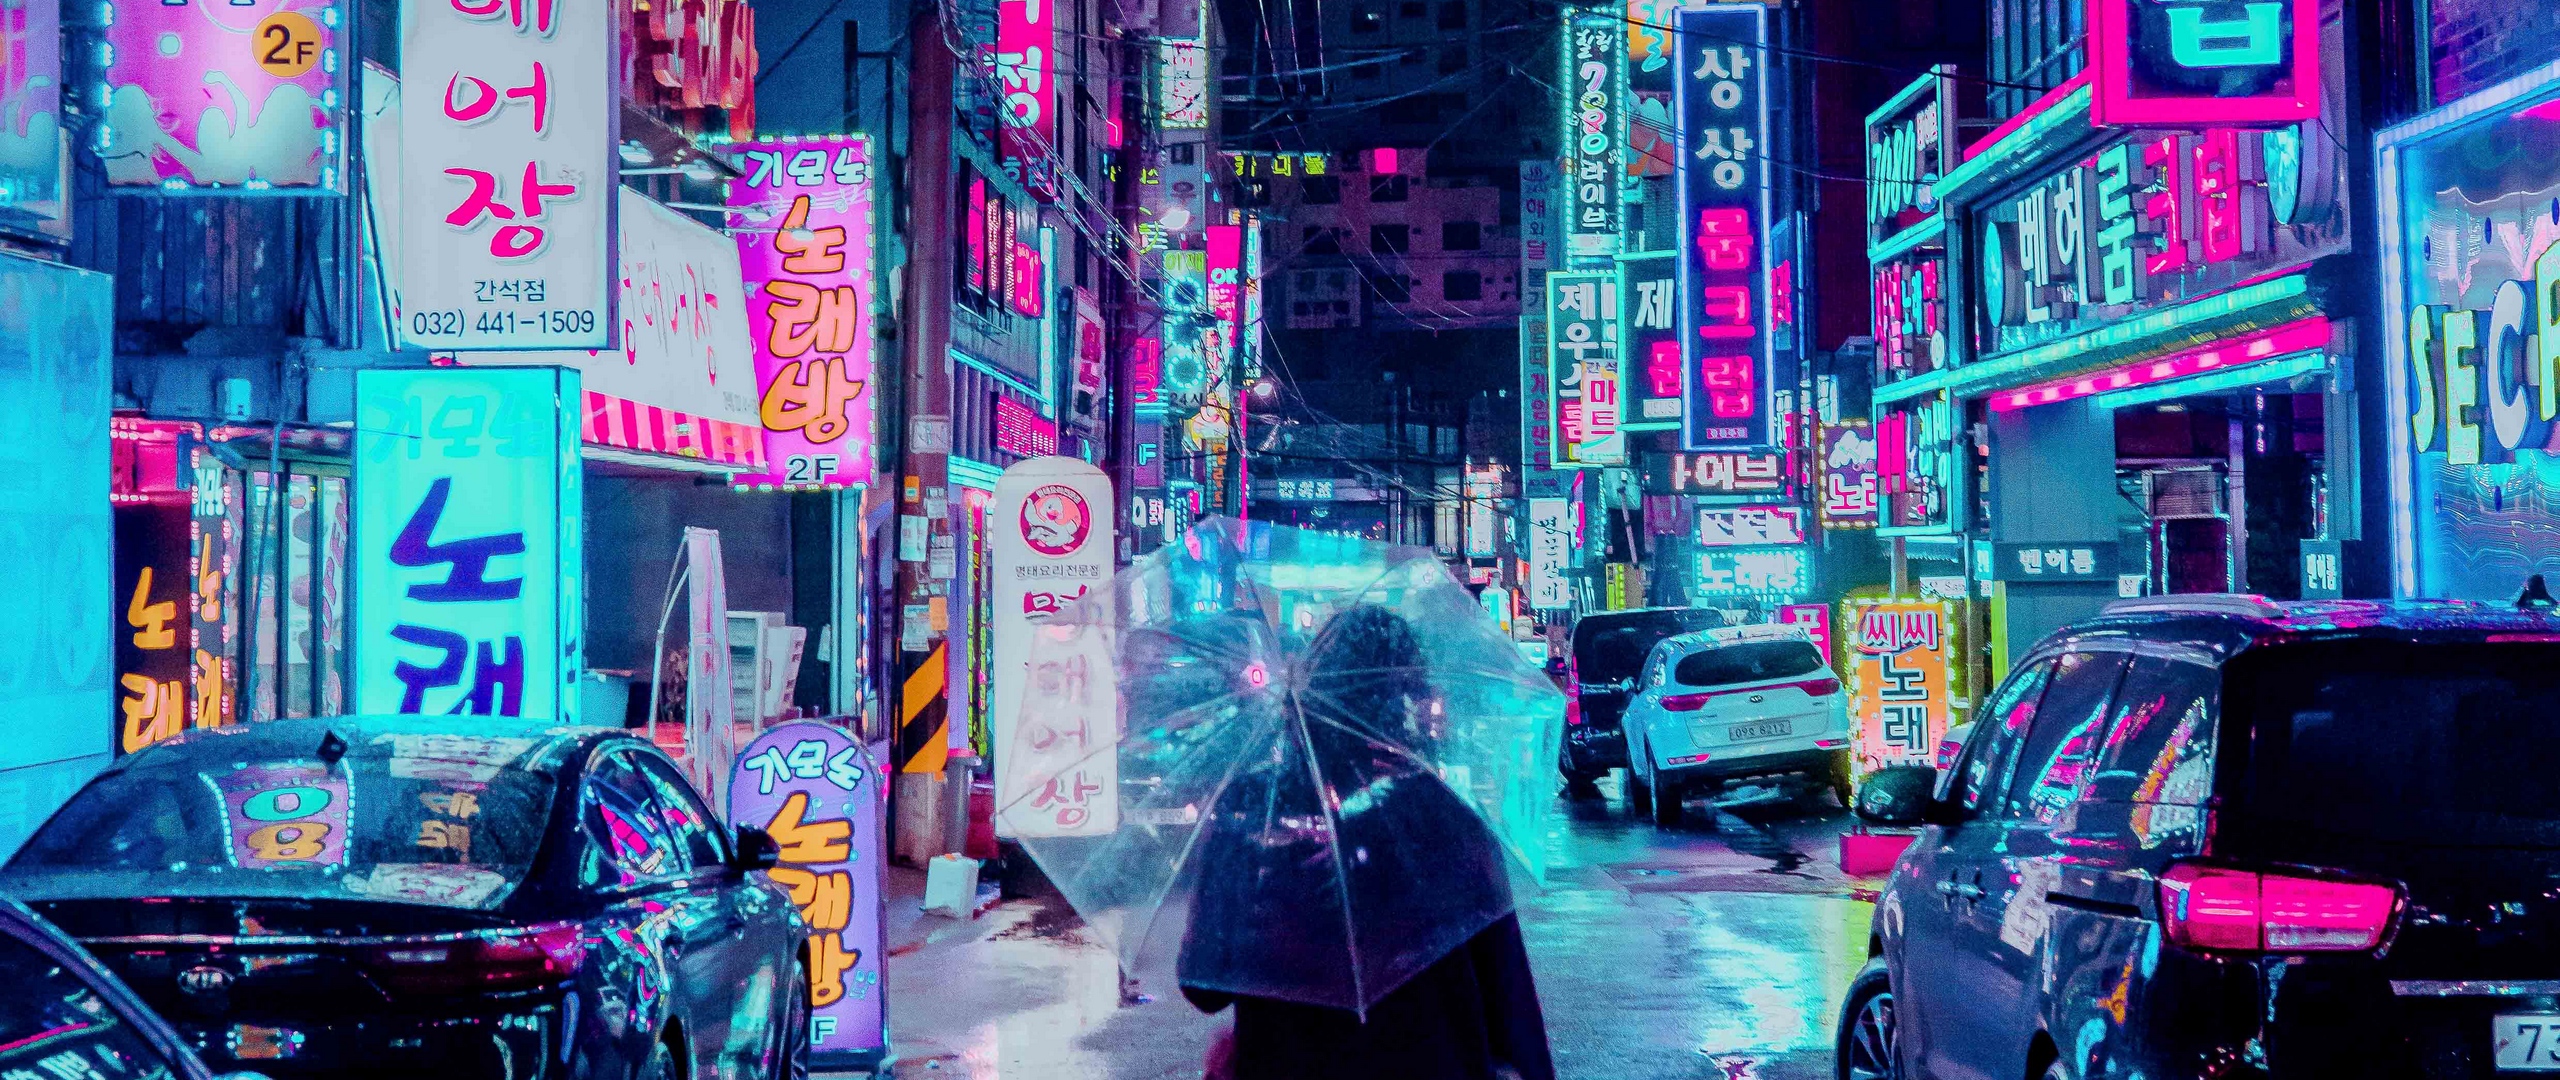 Download wallpaper 2560x1080 night city, street, umbrella